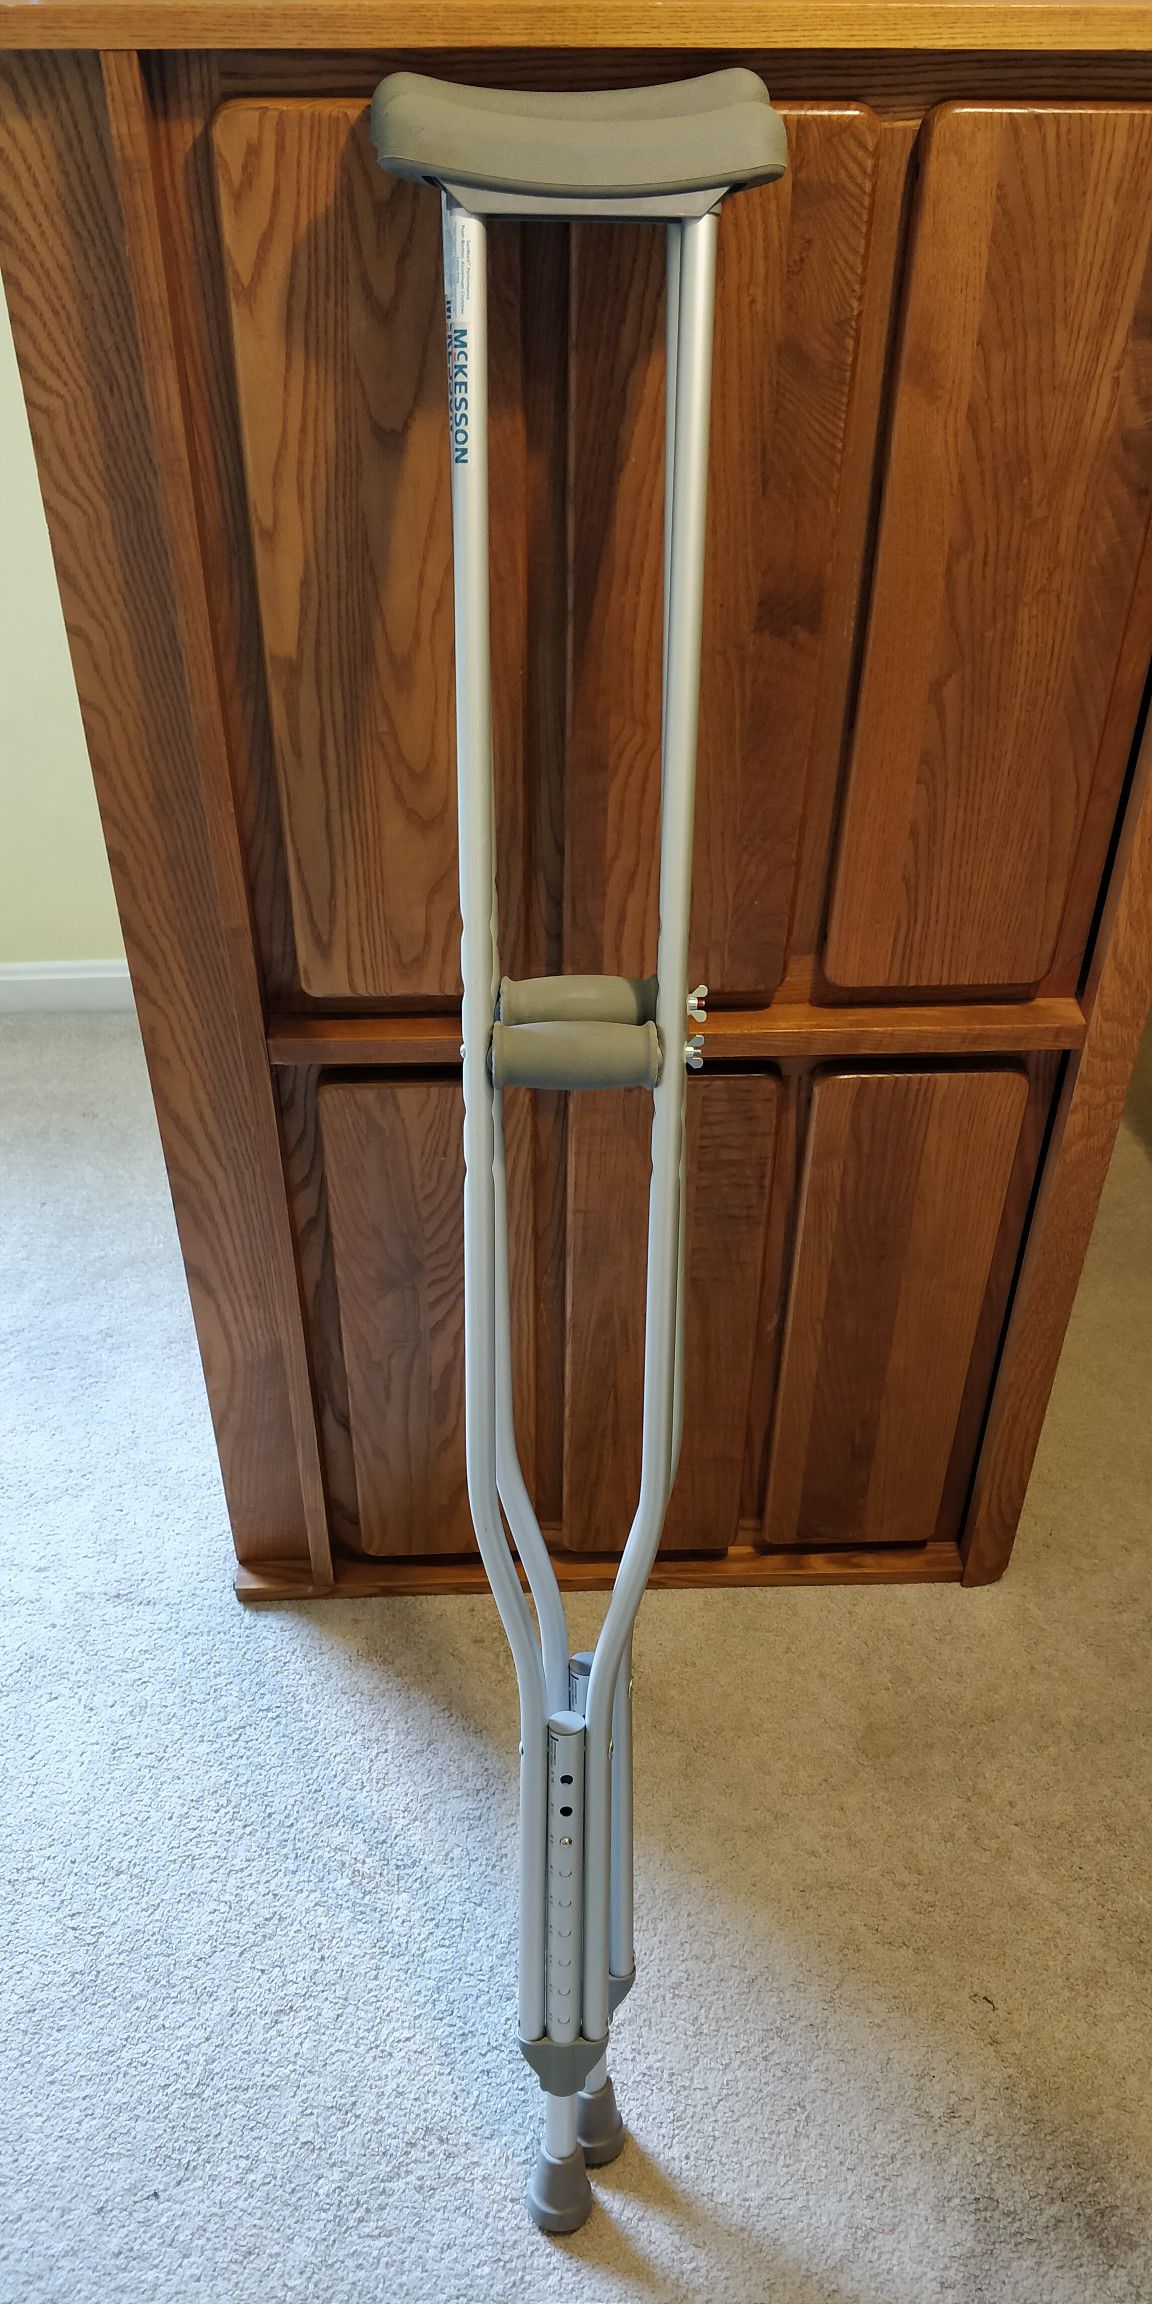 Crutches Free